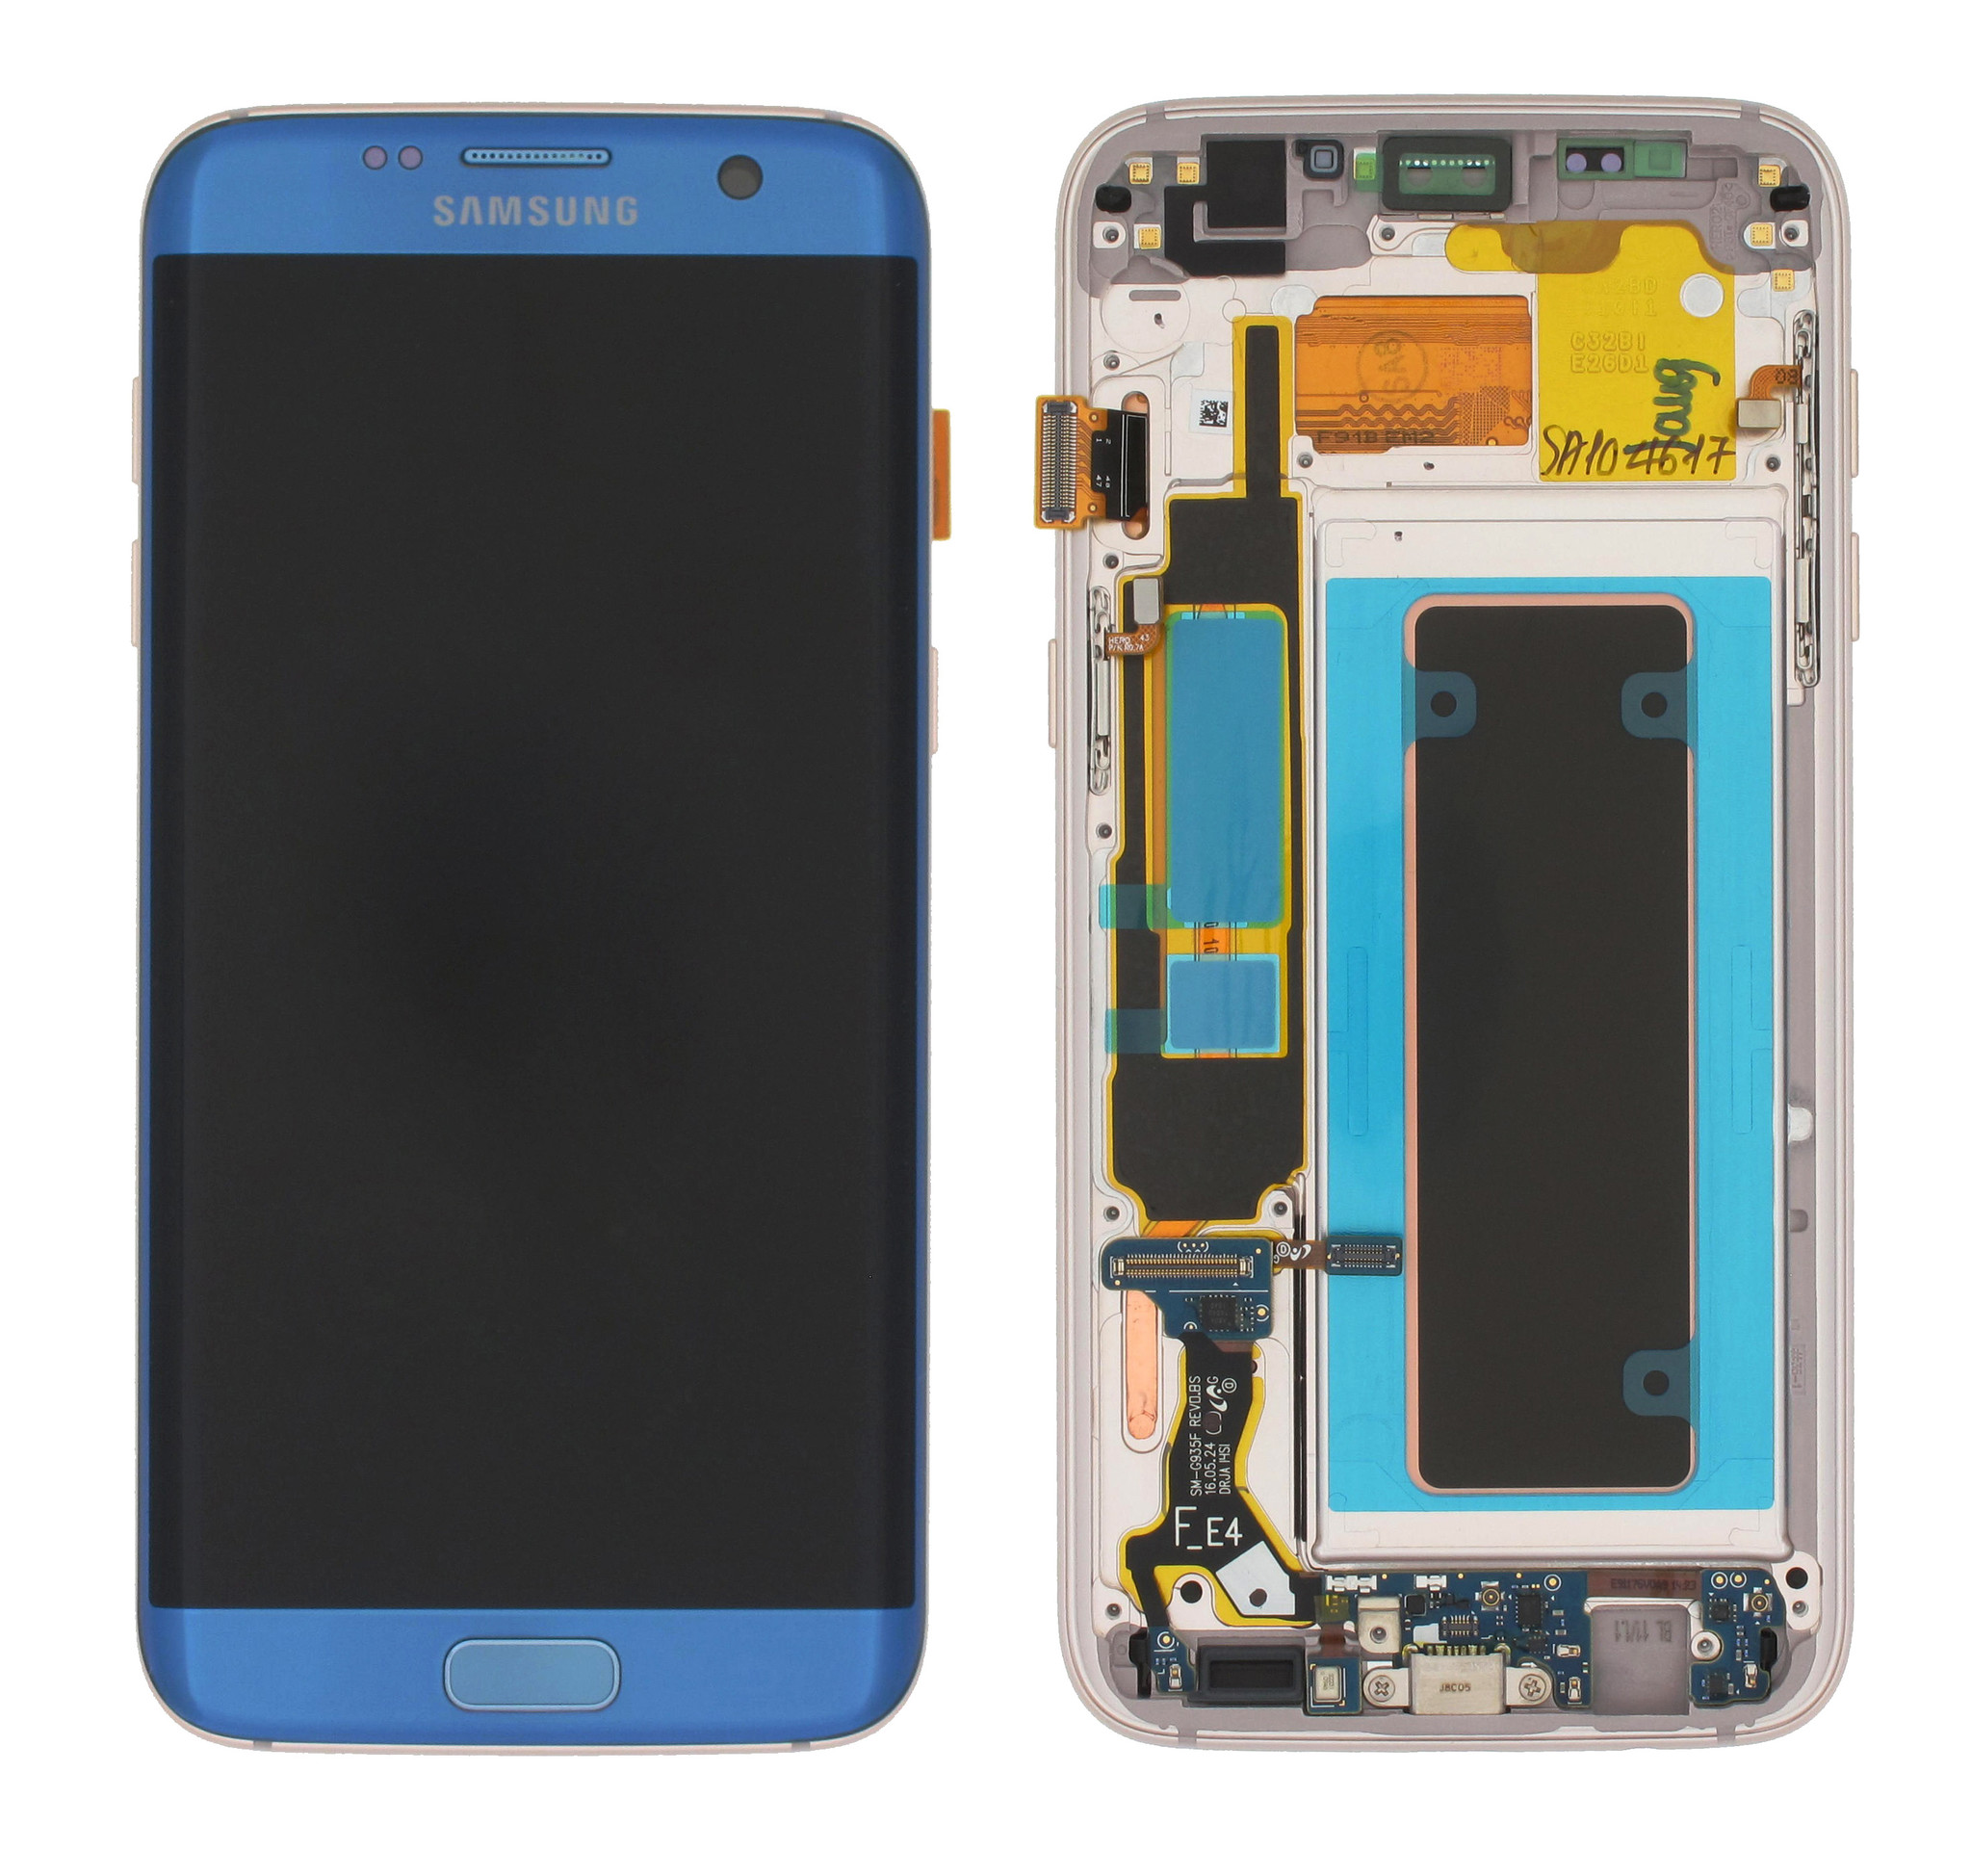 Zeeman Gezamenlijk beloning Samsung G935F Galaxy S7 Edge LCD Display Module, Coral Blue, GH97-18533G -  Parts4GSM